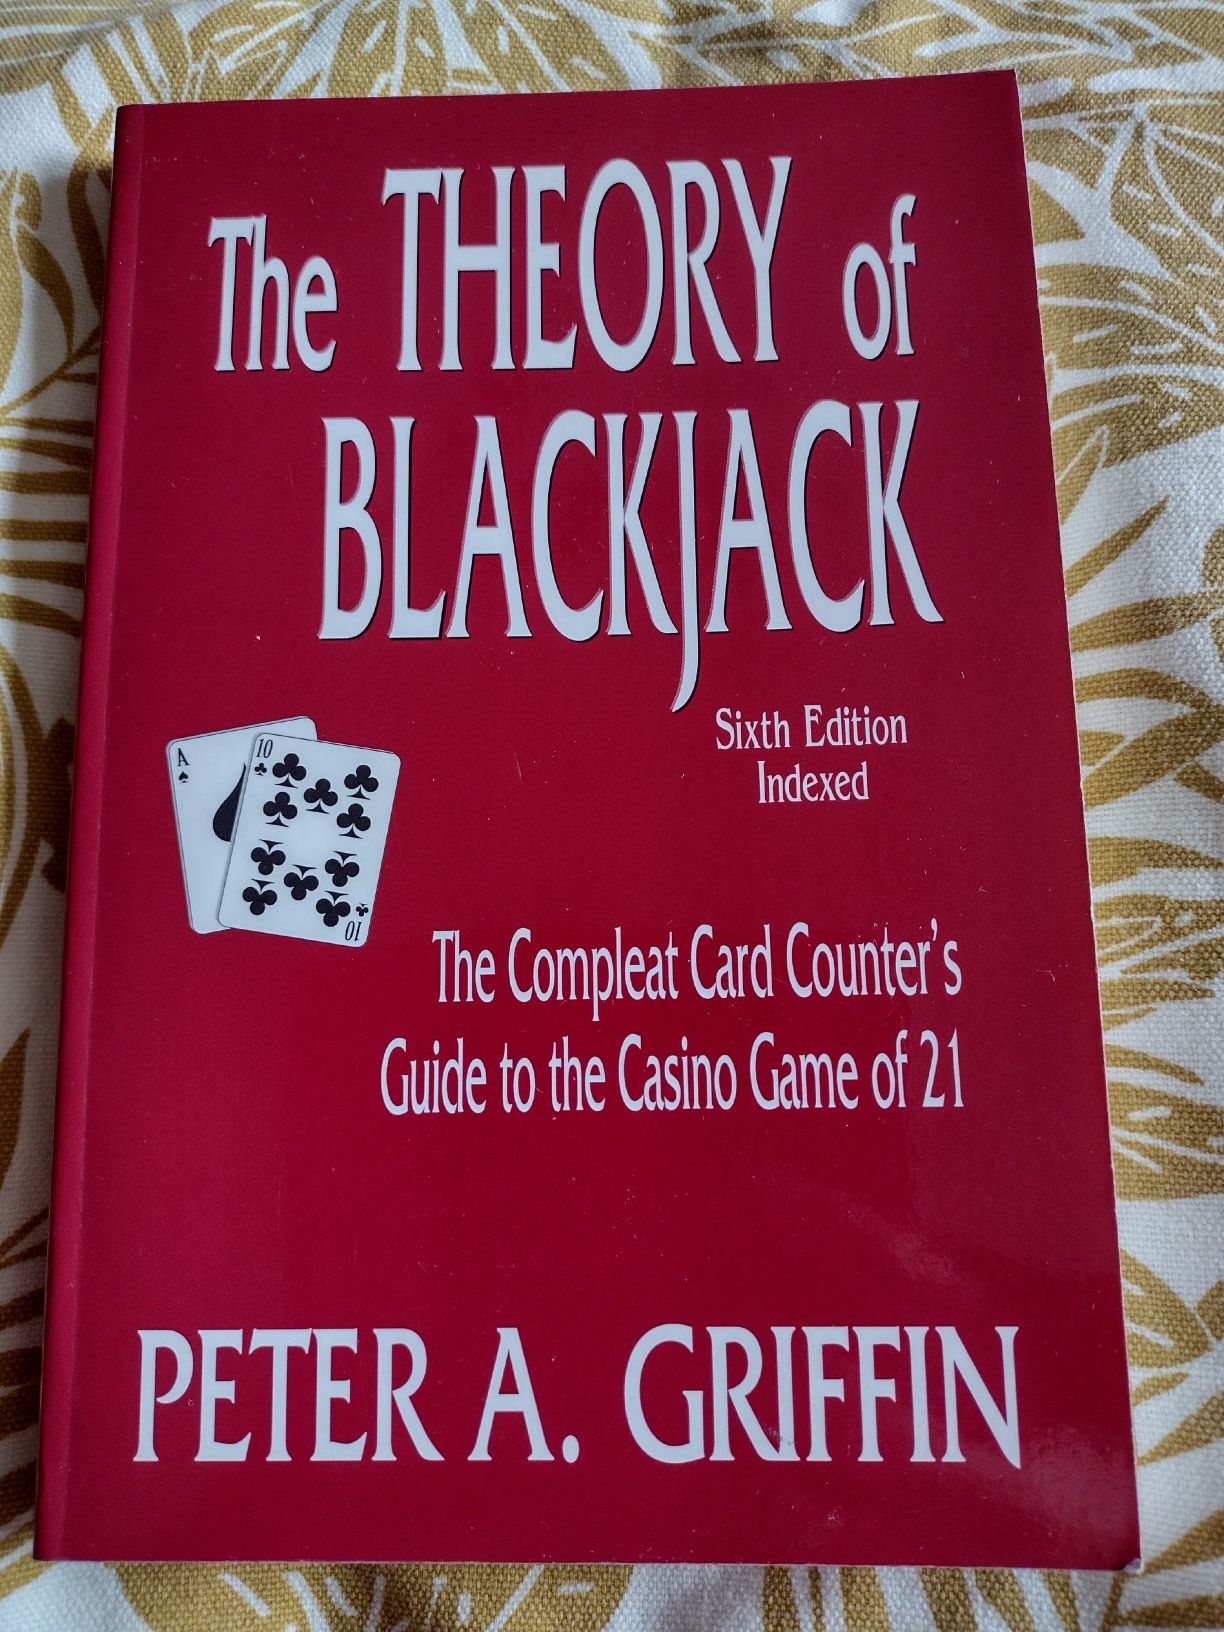 The theory of blackjack